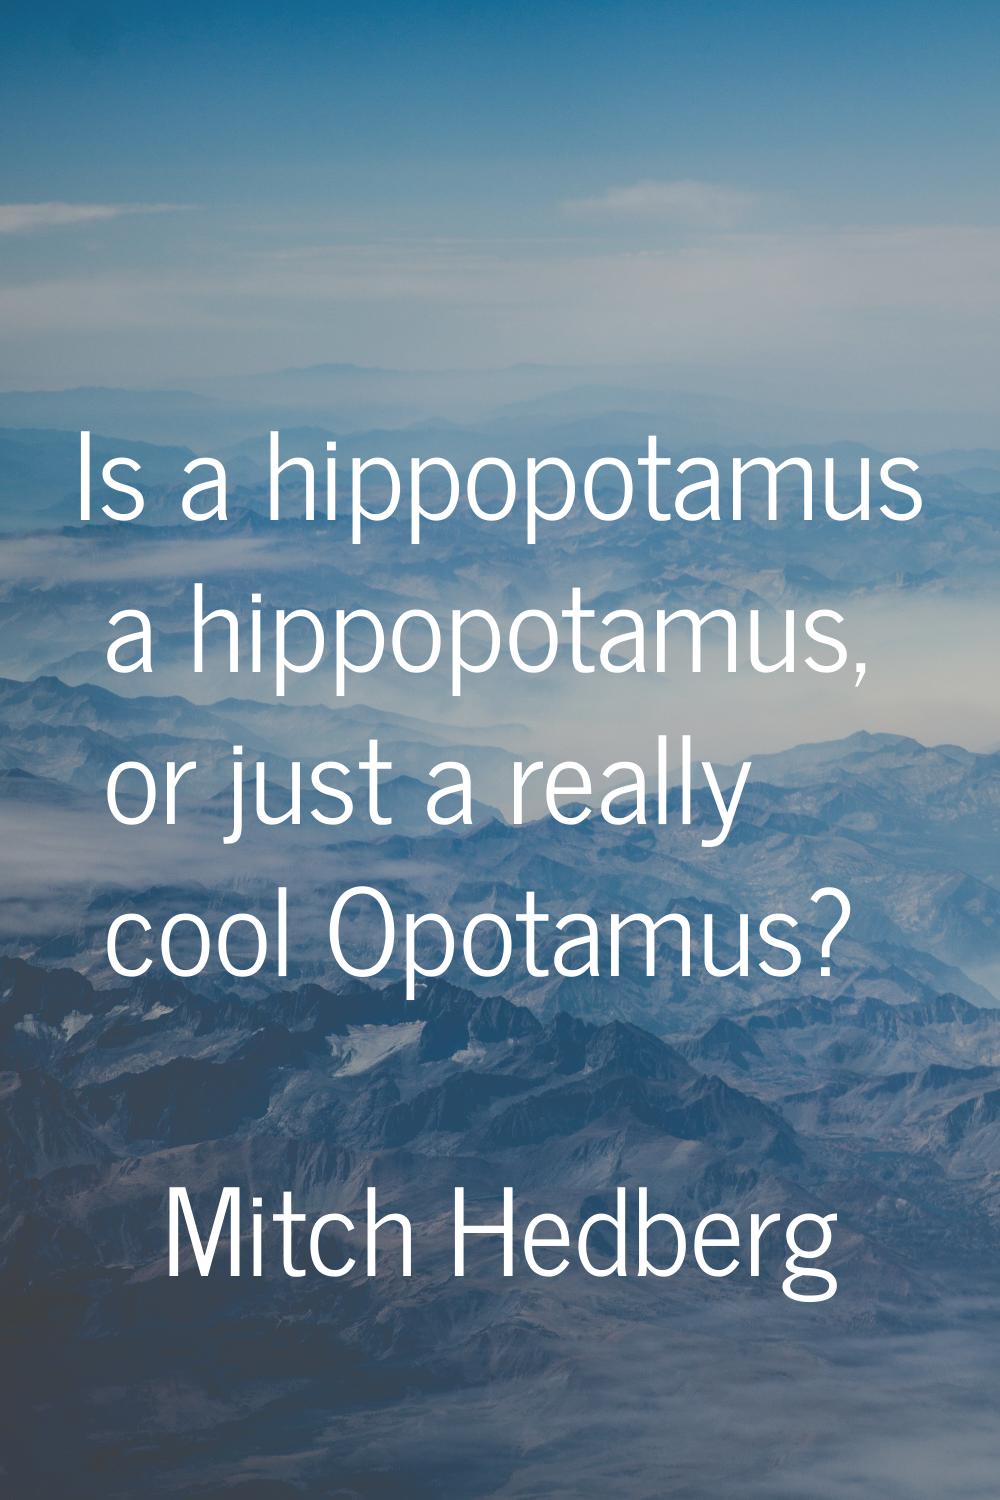 Is a hippopotamus a hippopotamus, or just a really cool Opotamus?